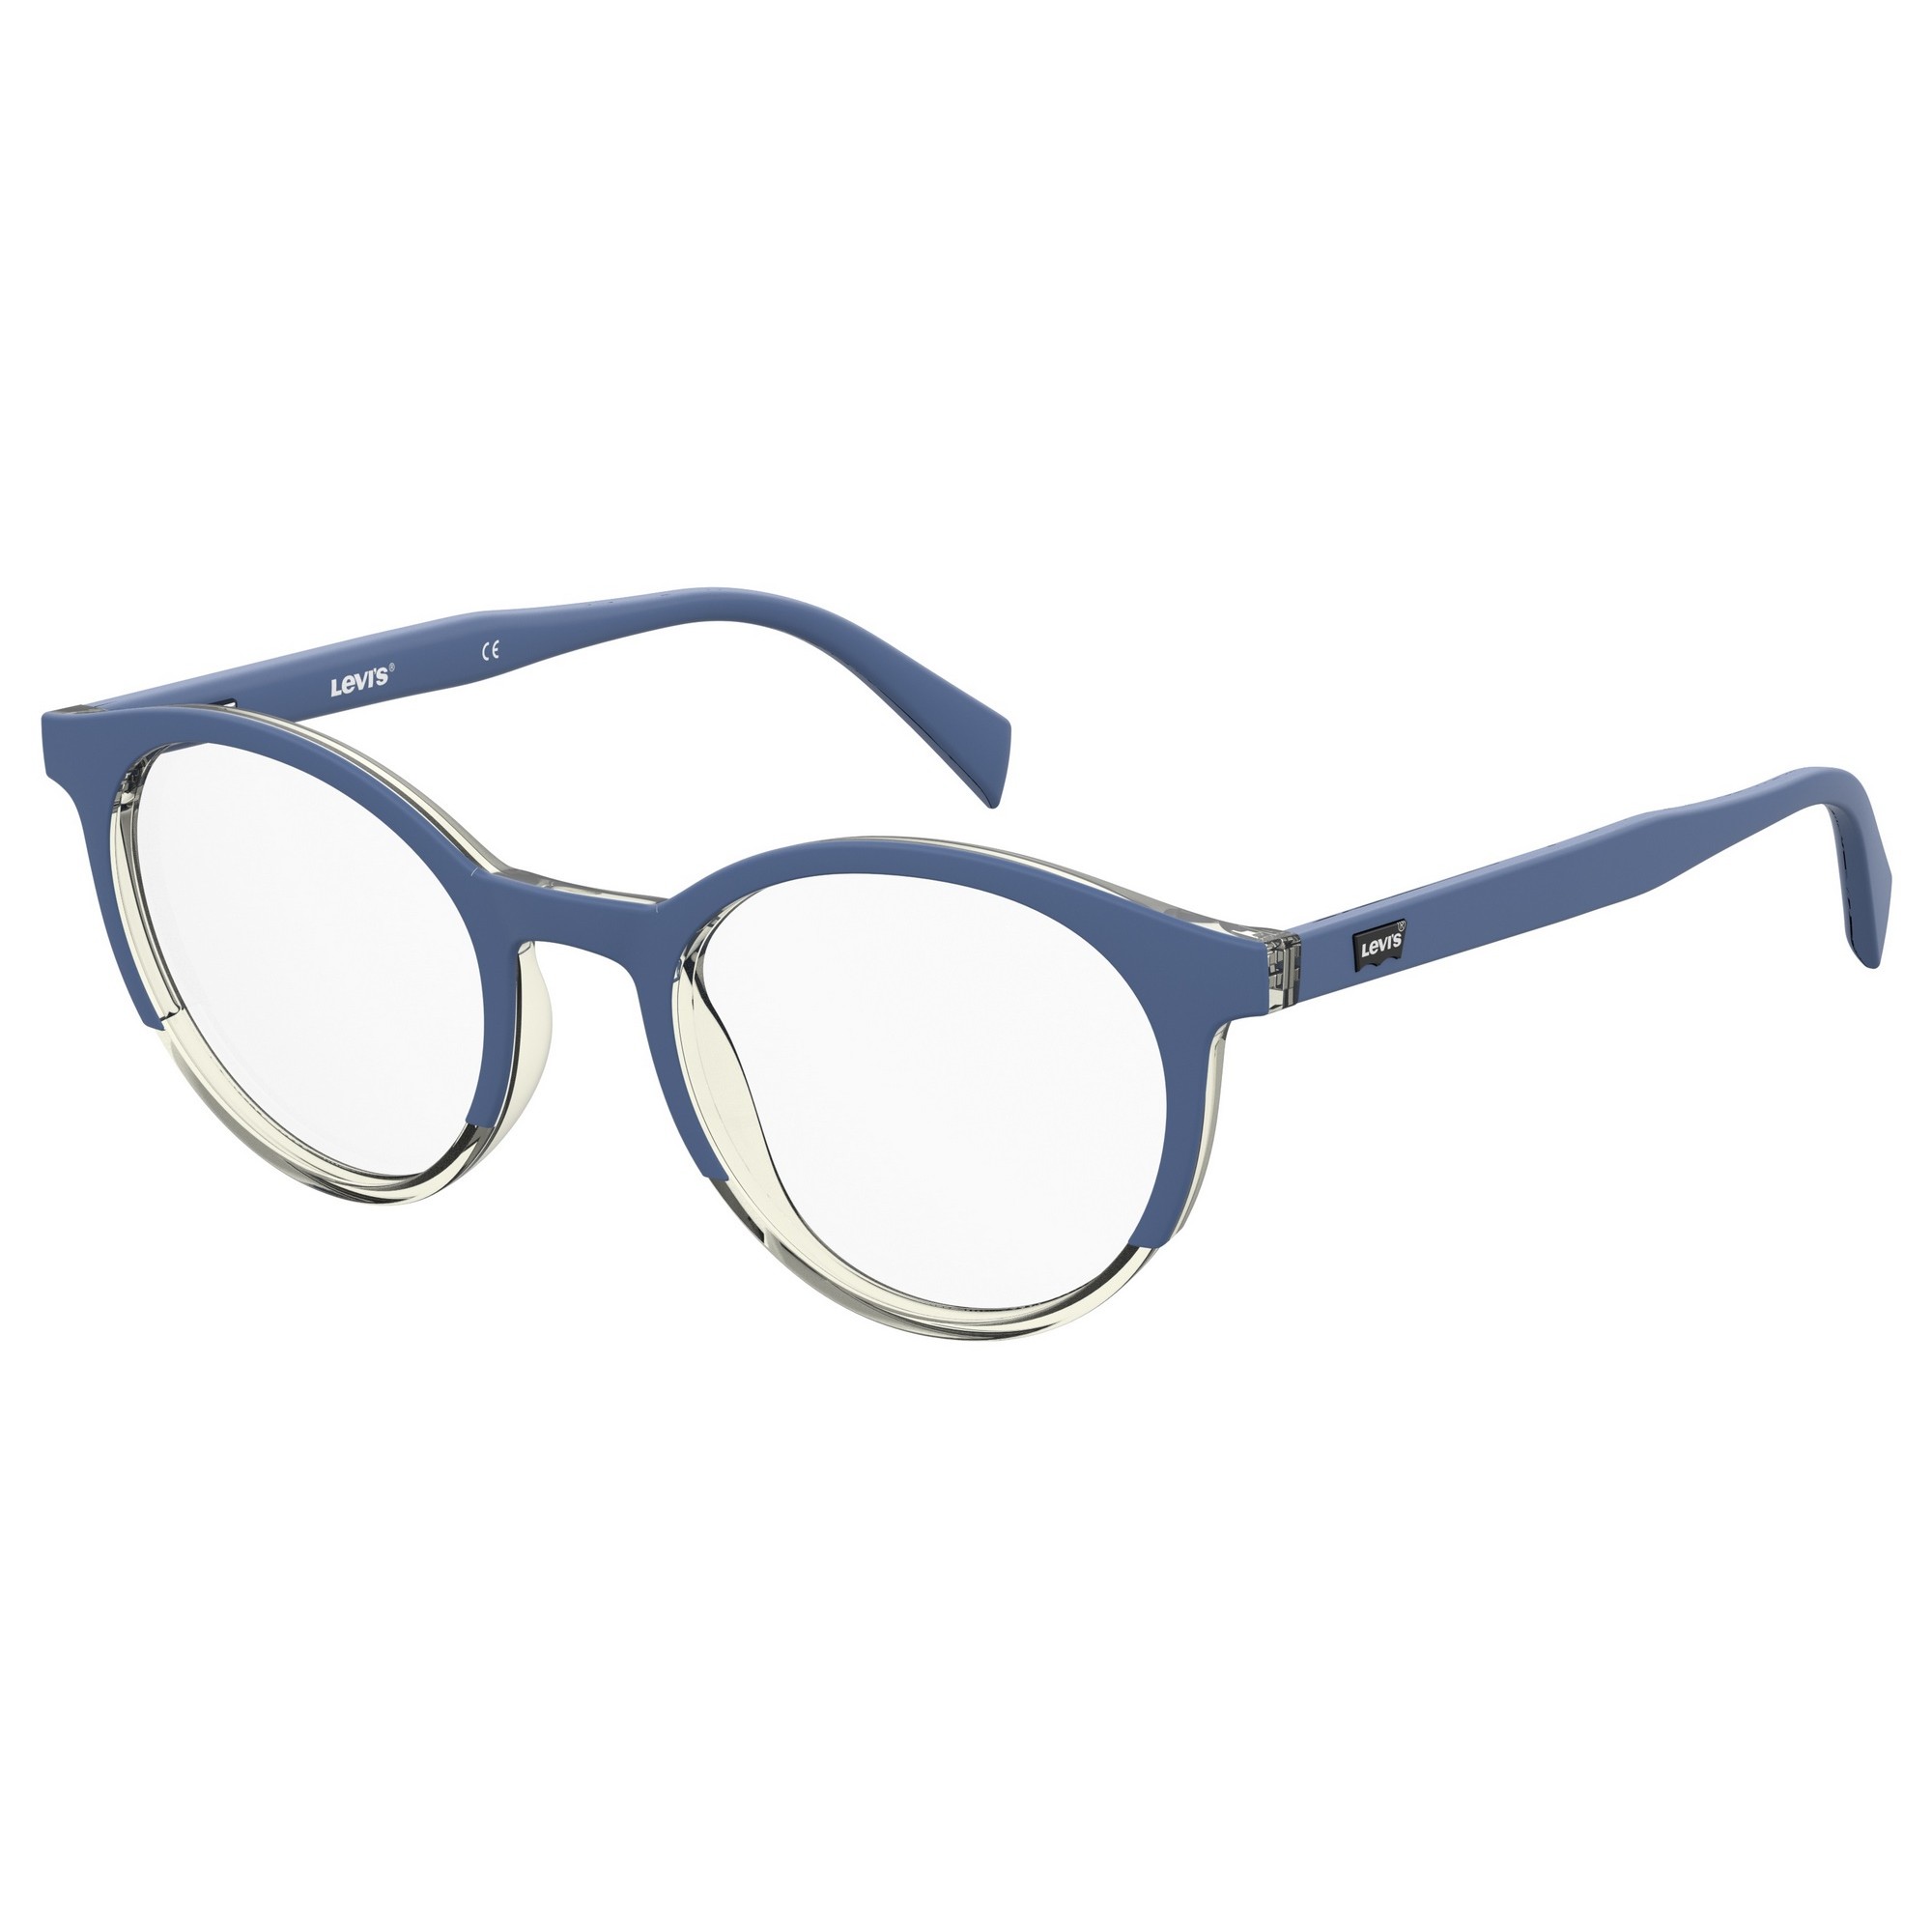 Levis LV 5044 - RNB Blue Green | Eyeglasses Woman